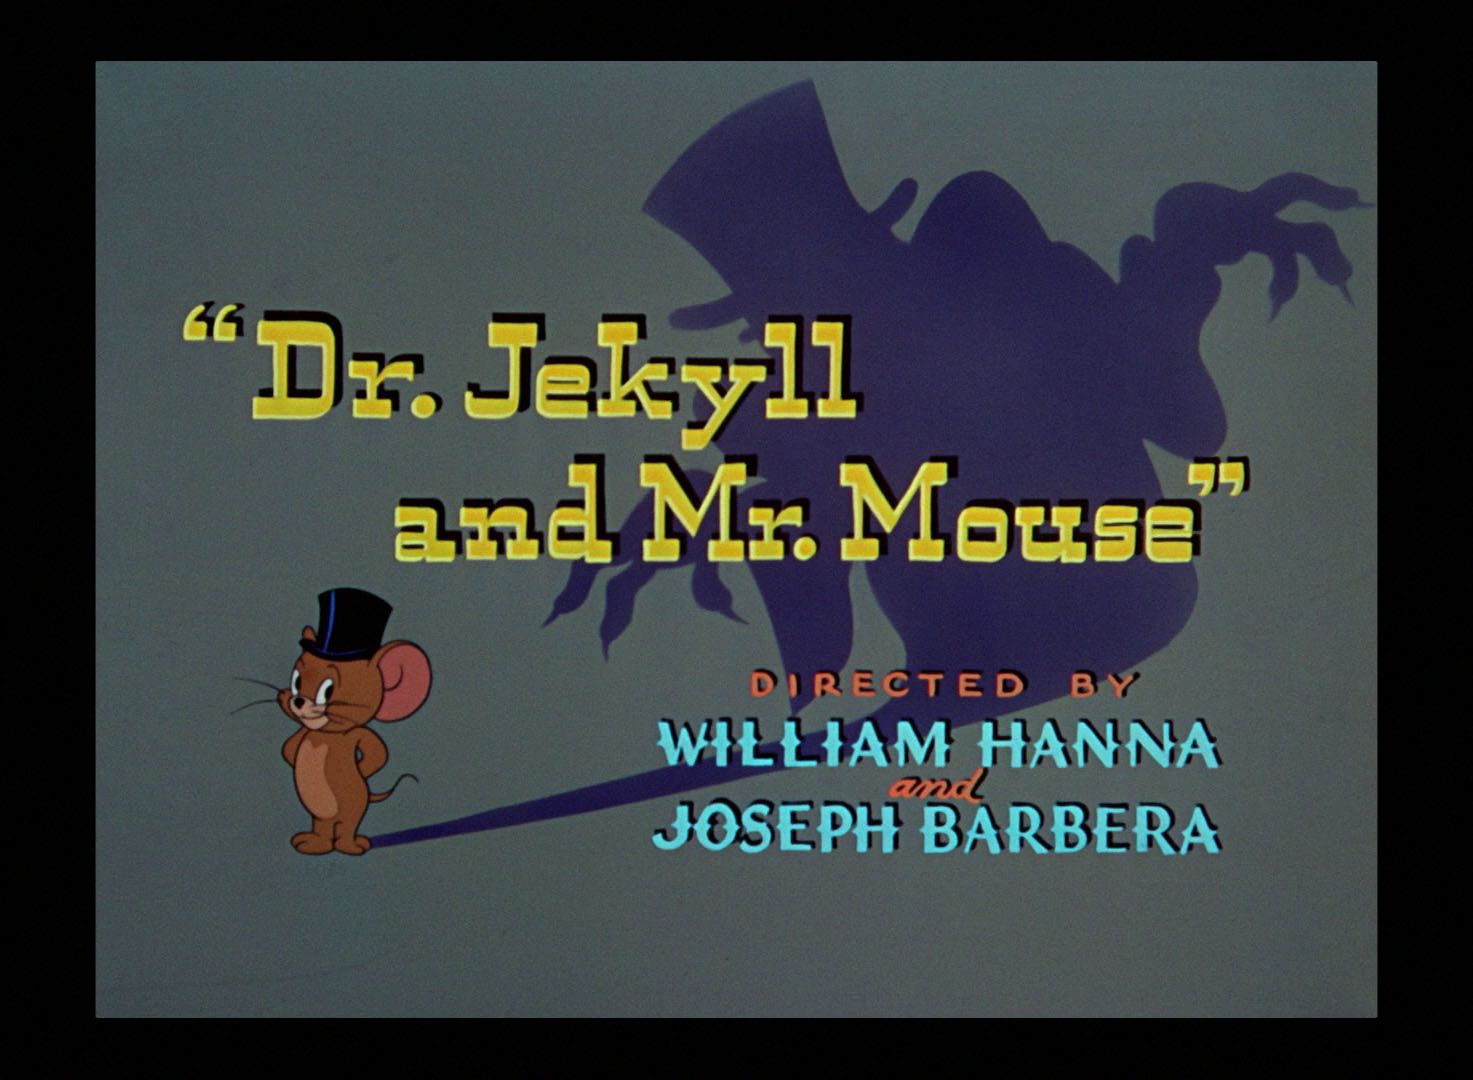 Доктор джерри. Том и Джерри доктор Джекилл и Мистер мышь. Том и Джерри доктор Джекилл и Мистер мышь 1947.